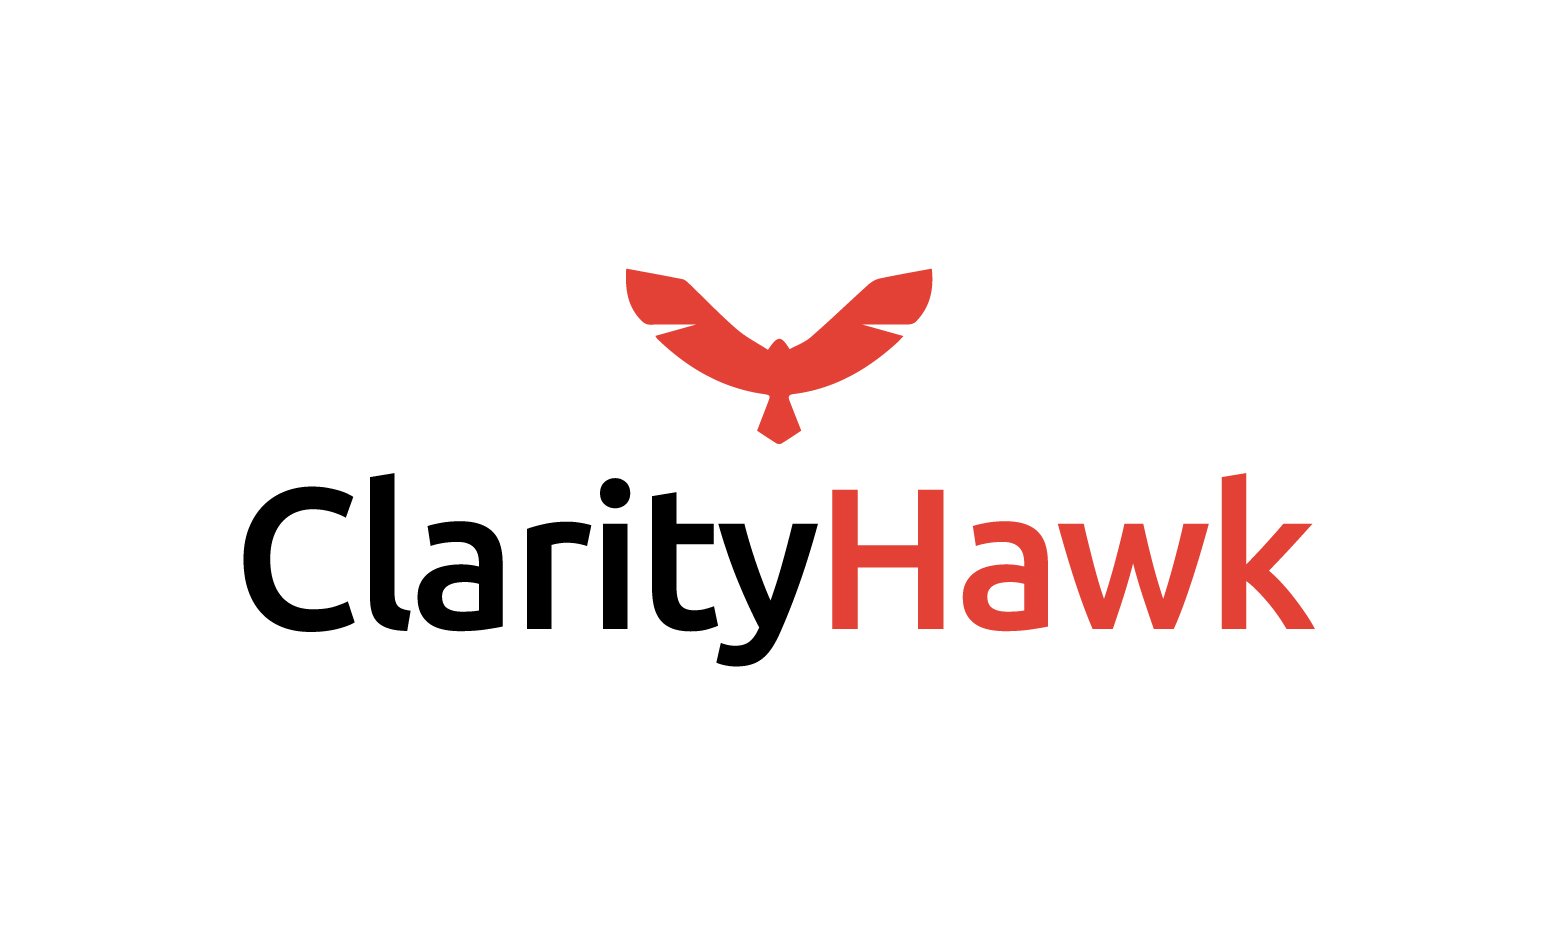 ClarityHawk.com - Creative brandable domain for sale